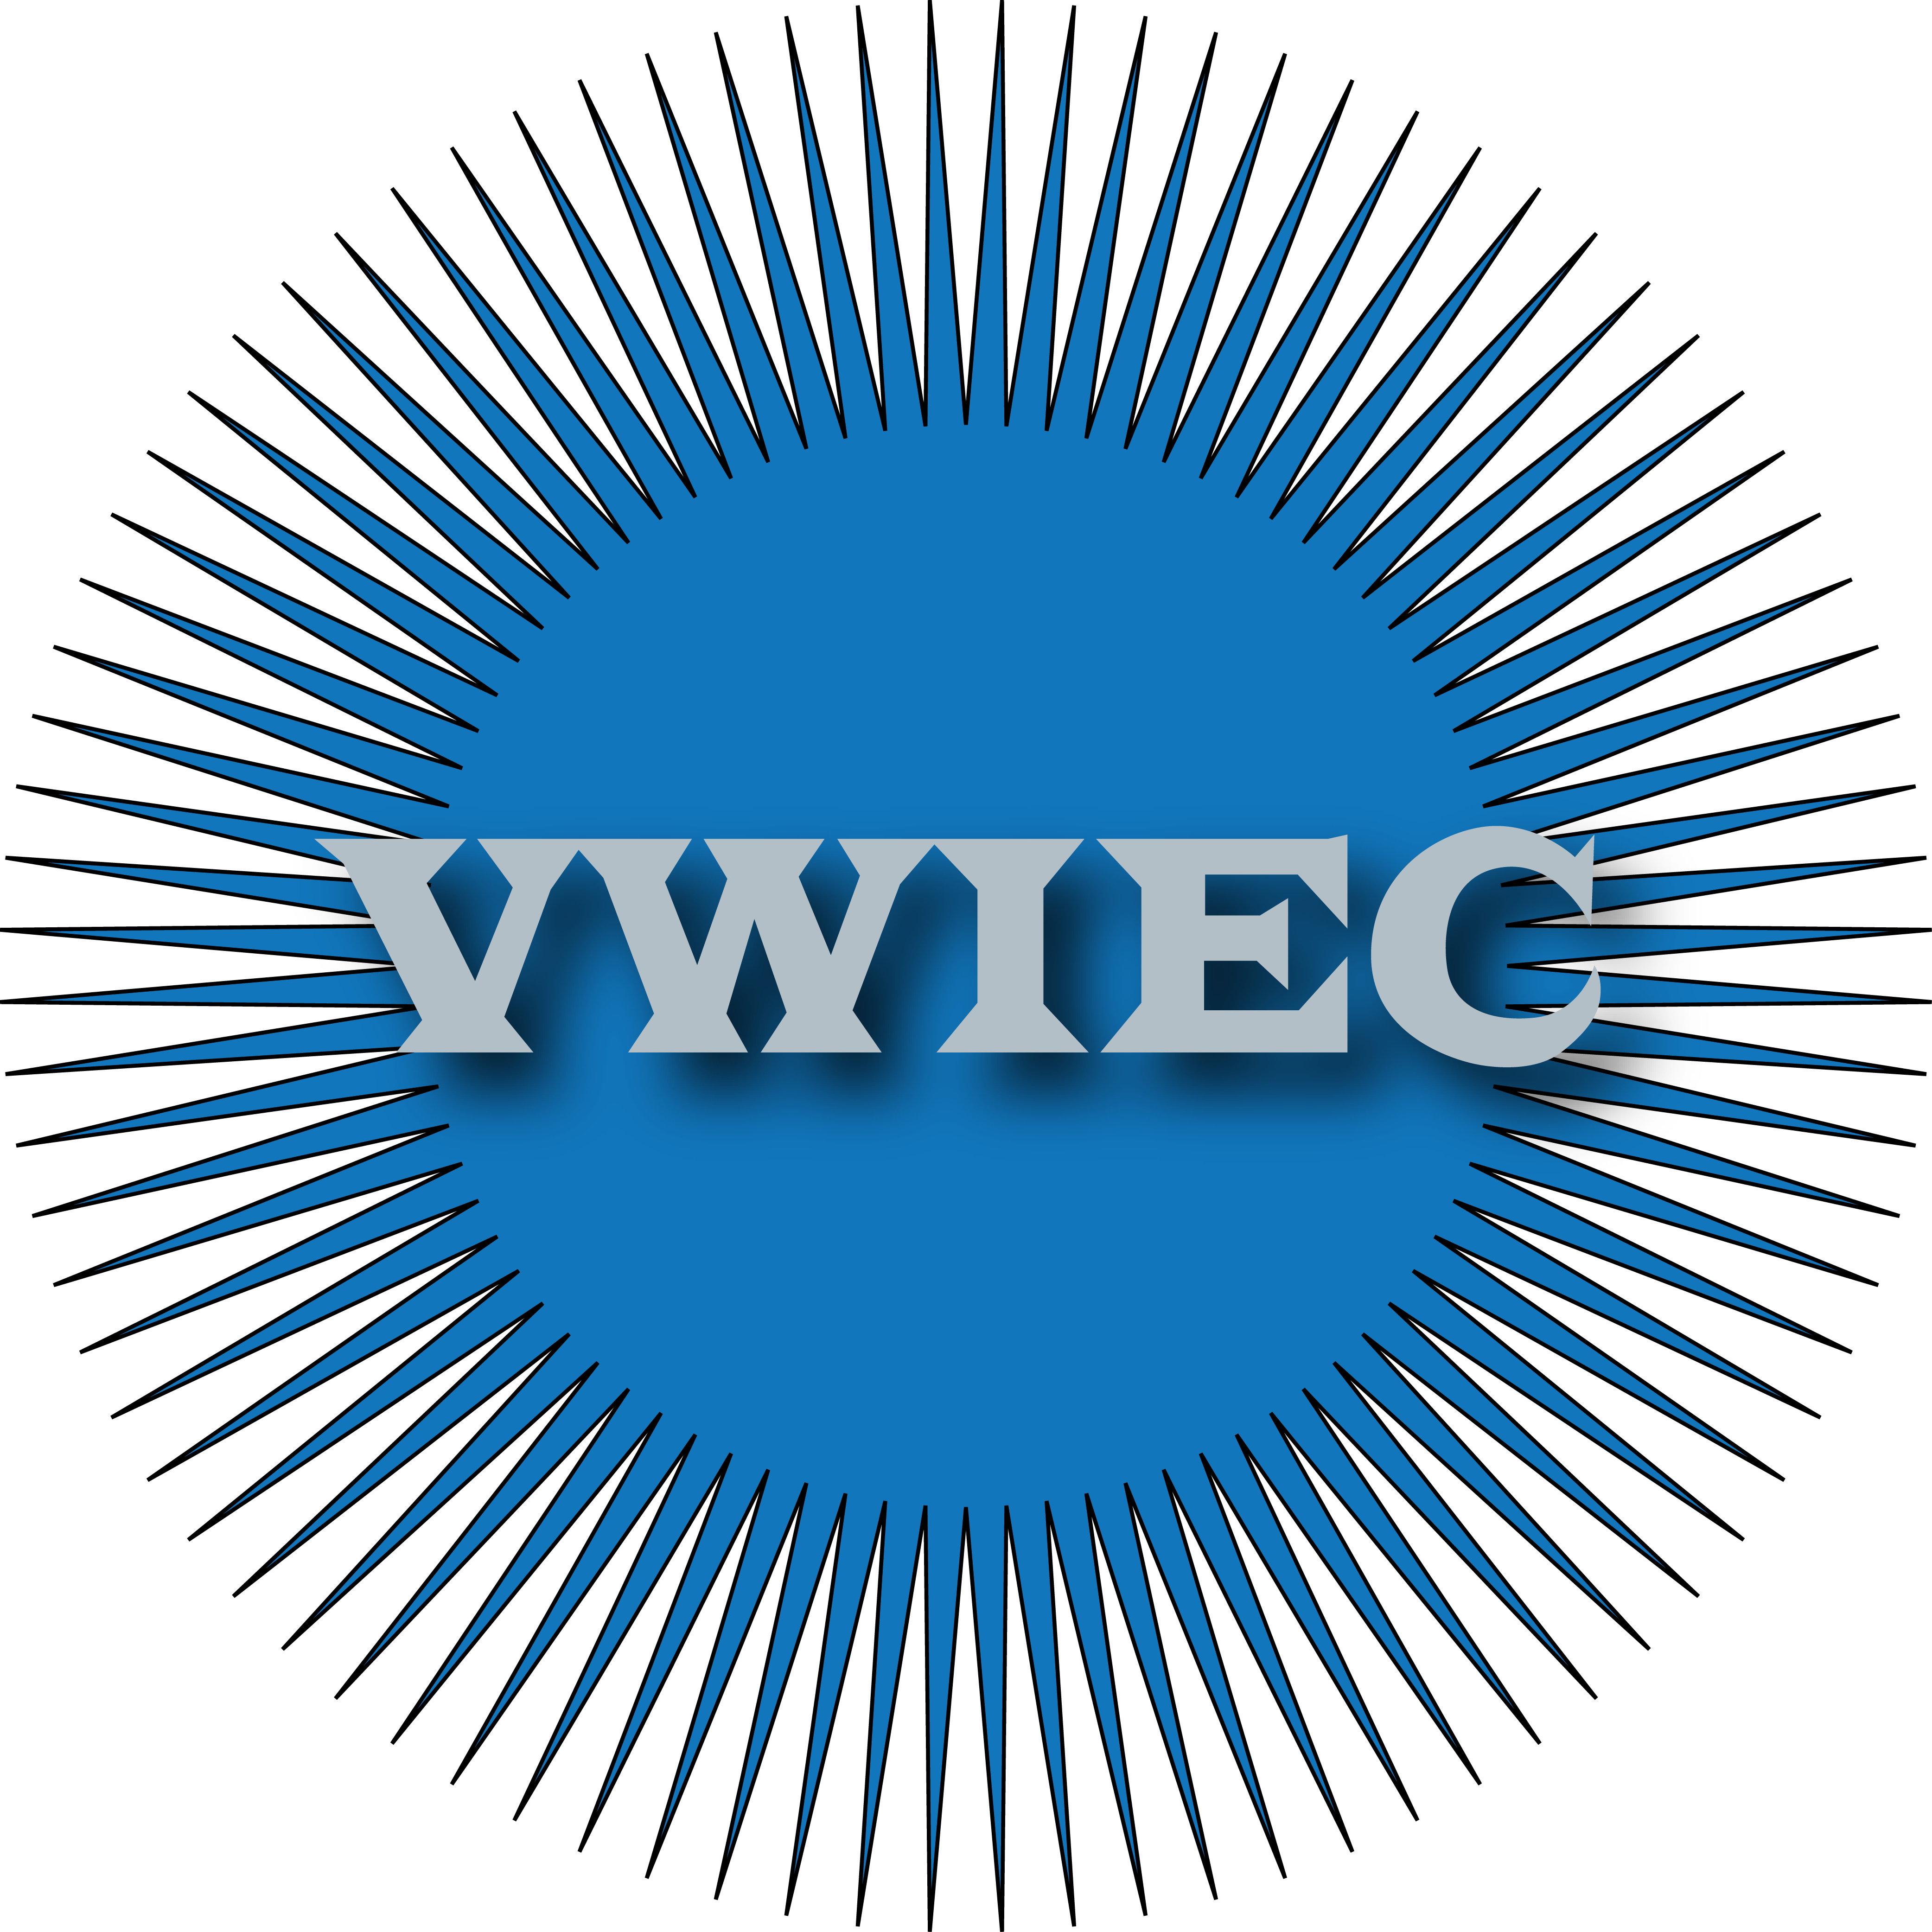 Virginia Workforce Innovation and Entrepreneurship Center logo